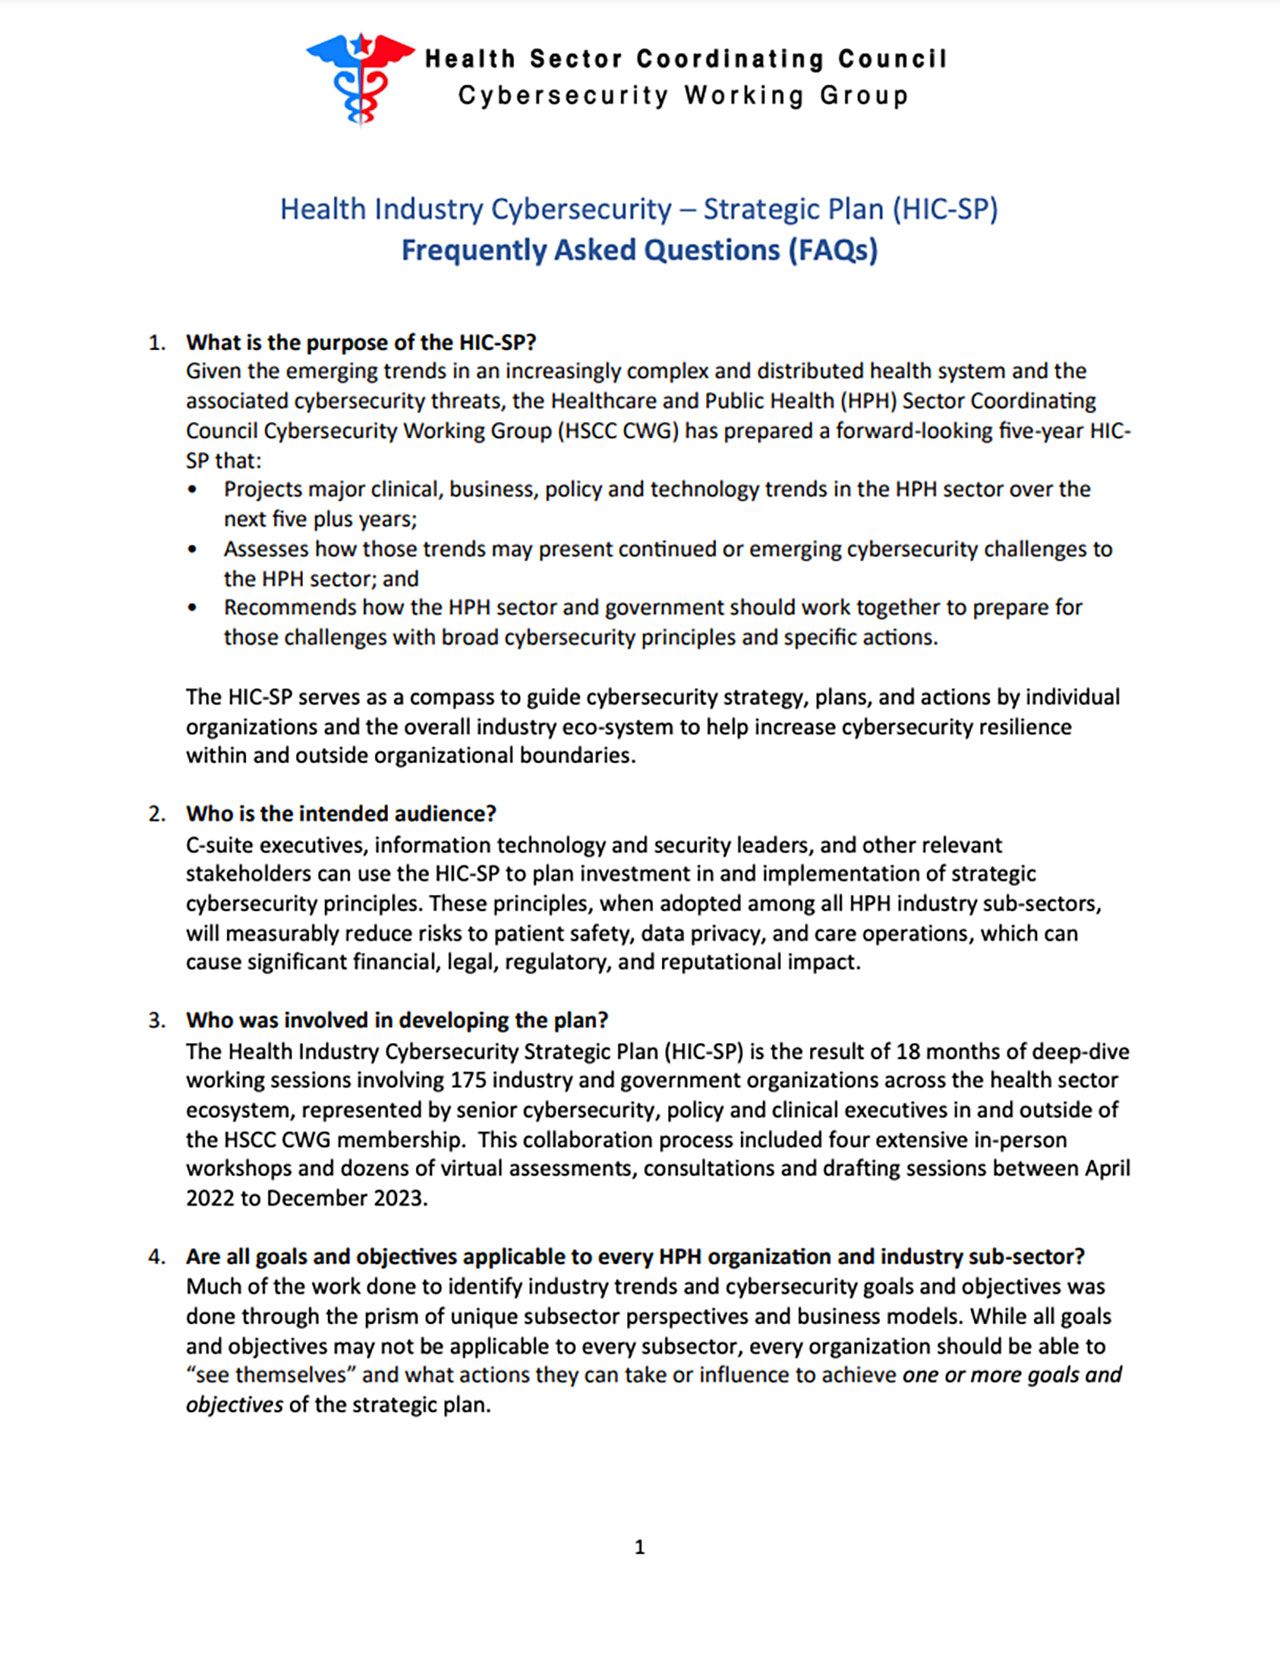 HSCC Health Industry Cybersecurity Strategic Plan FAQ